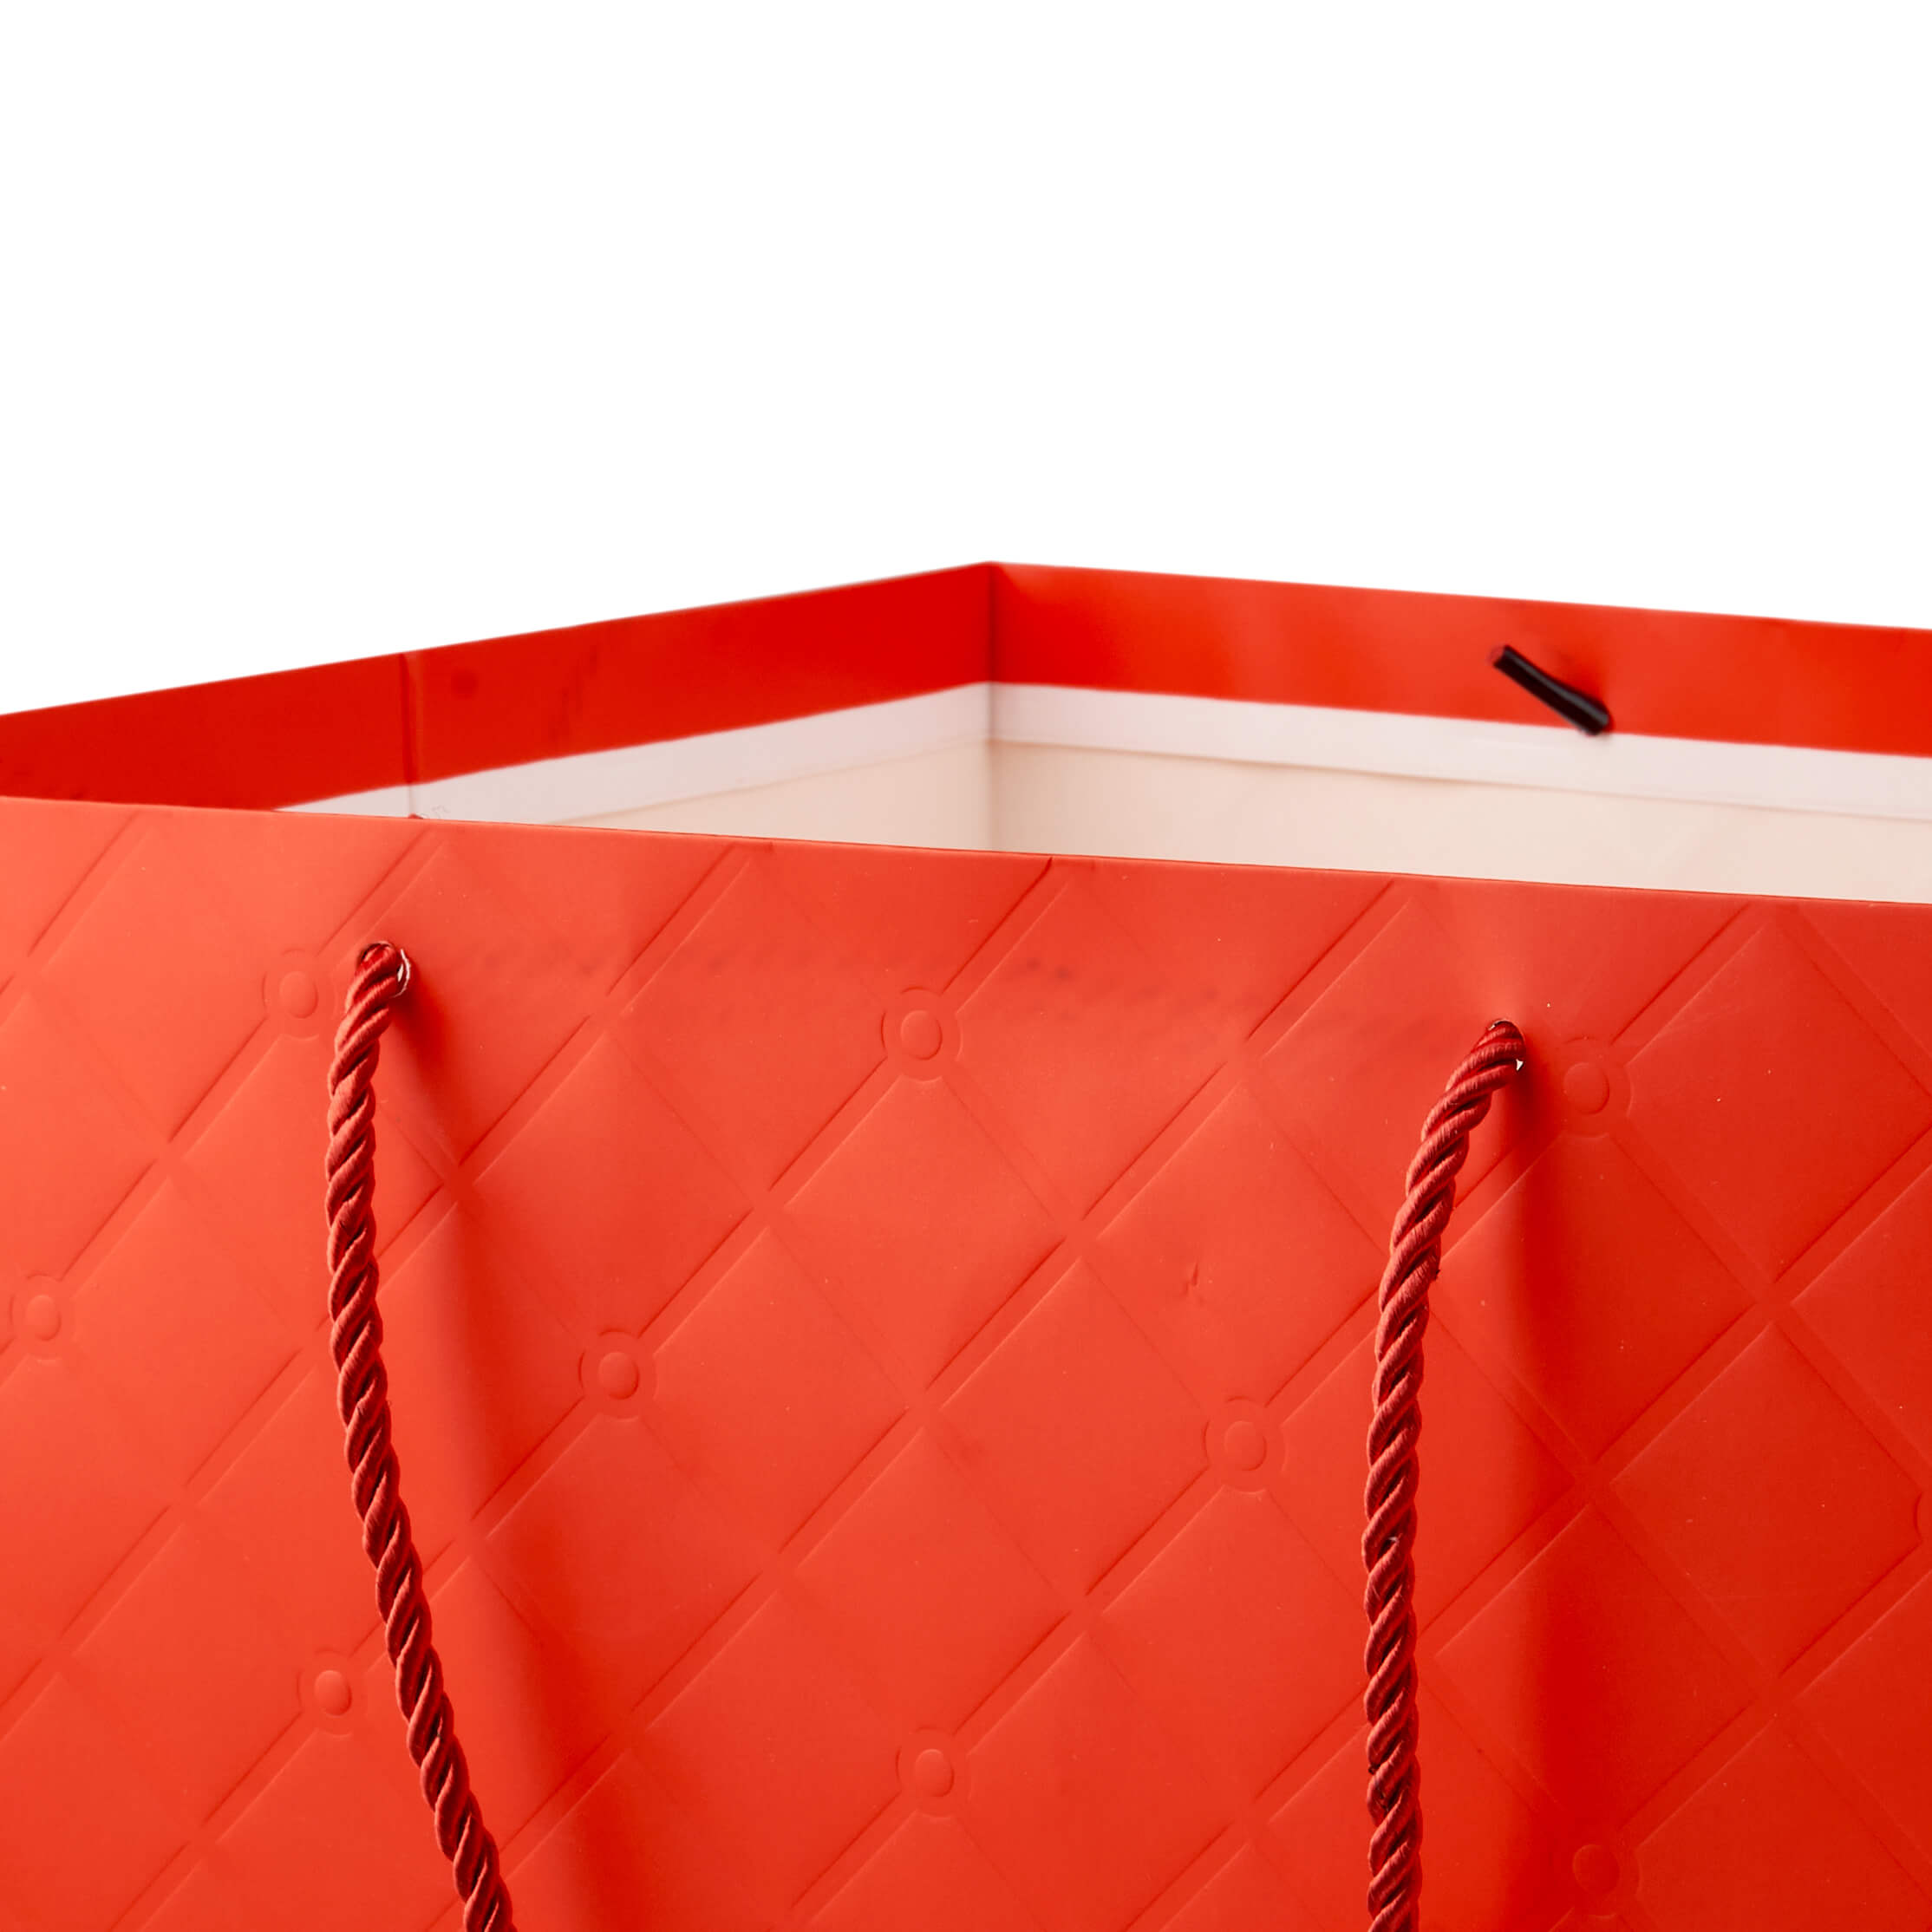 Louis Vuitton Paper Shopping Bag - Gem